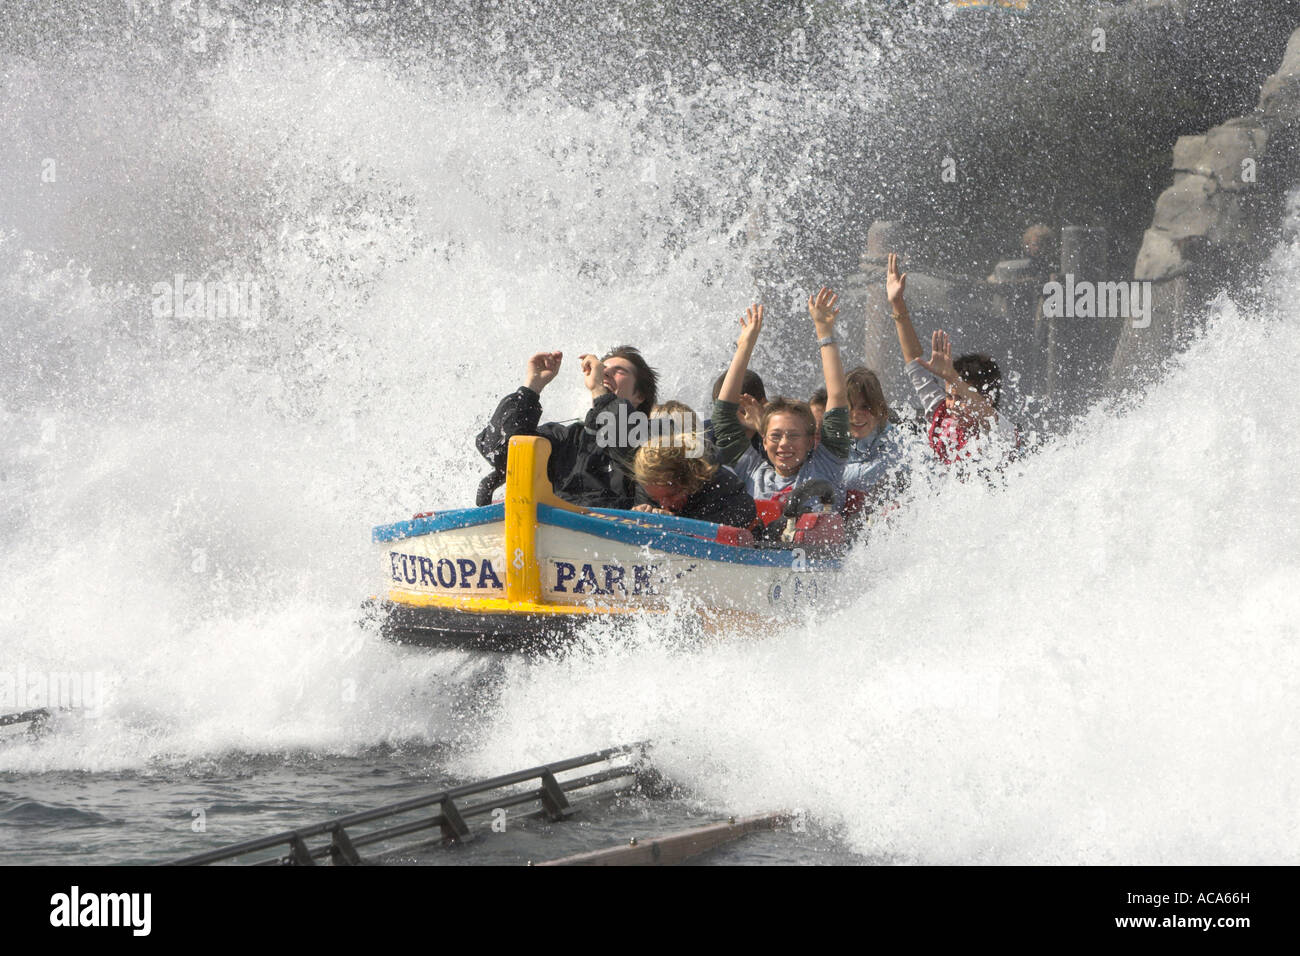 Water roller coaster Poseidón, Europa Park Rust, Bade-Wuerttemberg, Alemania Foto de stock